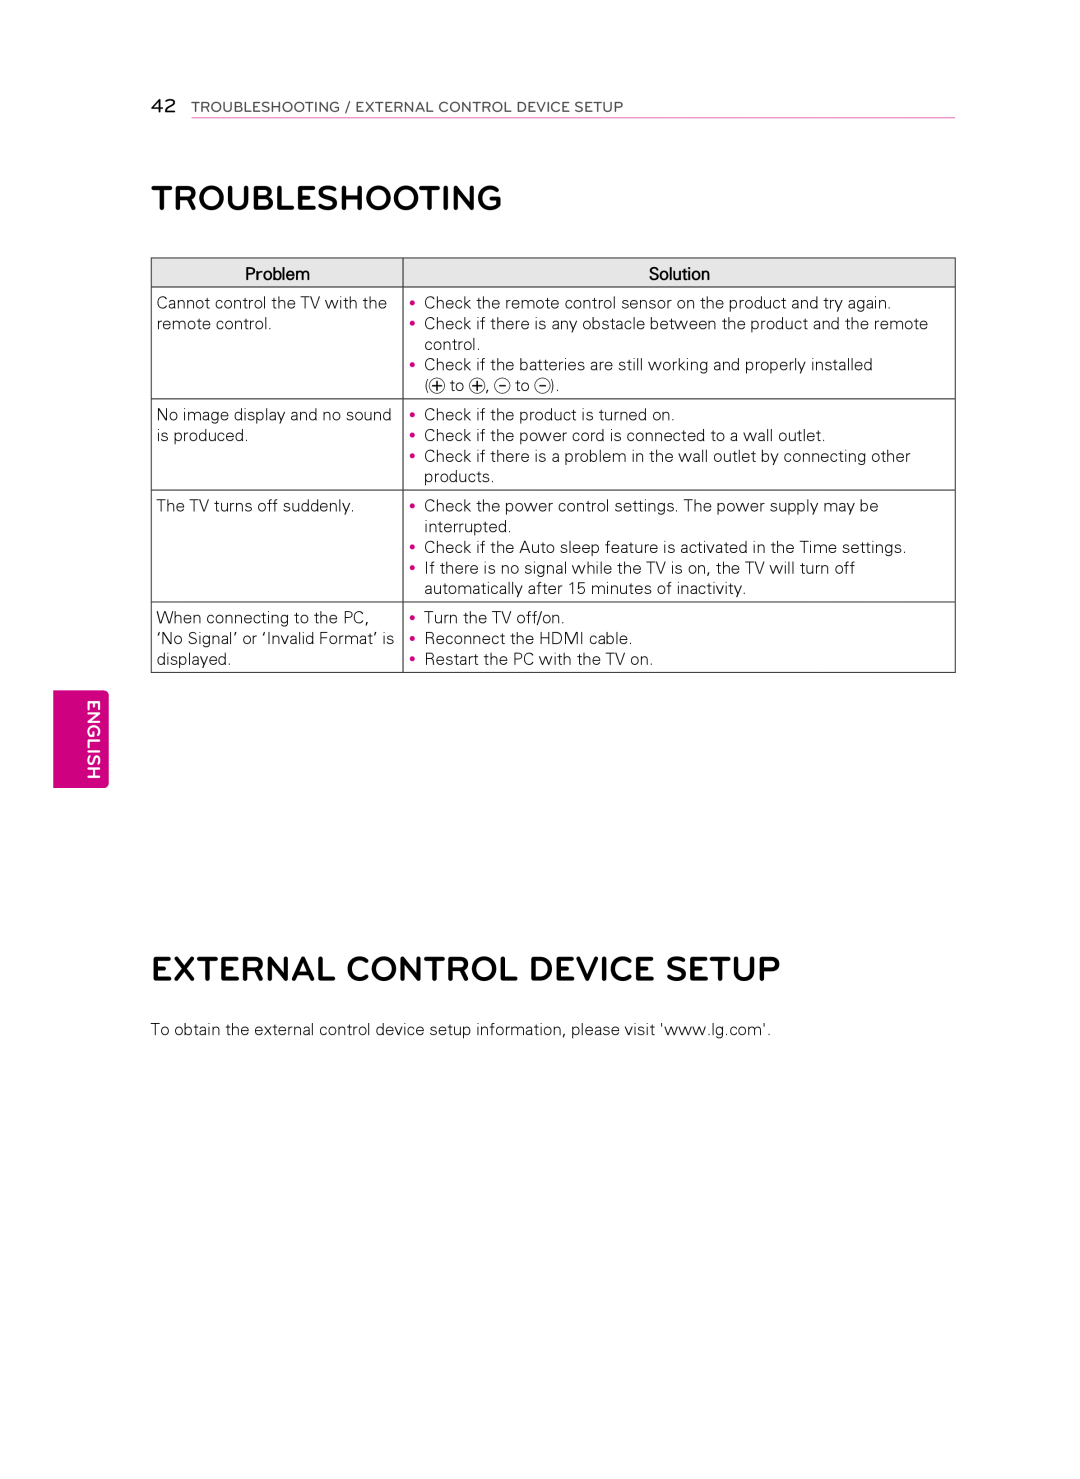 Toshiba 60PH6700, 50PH4700 owner manual Troubleshooting, External Control Device Setup, English, Problem, Solution 